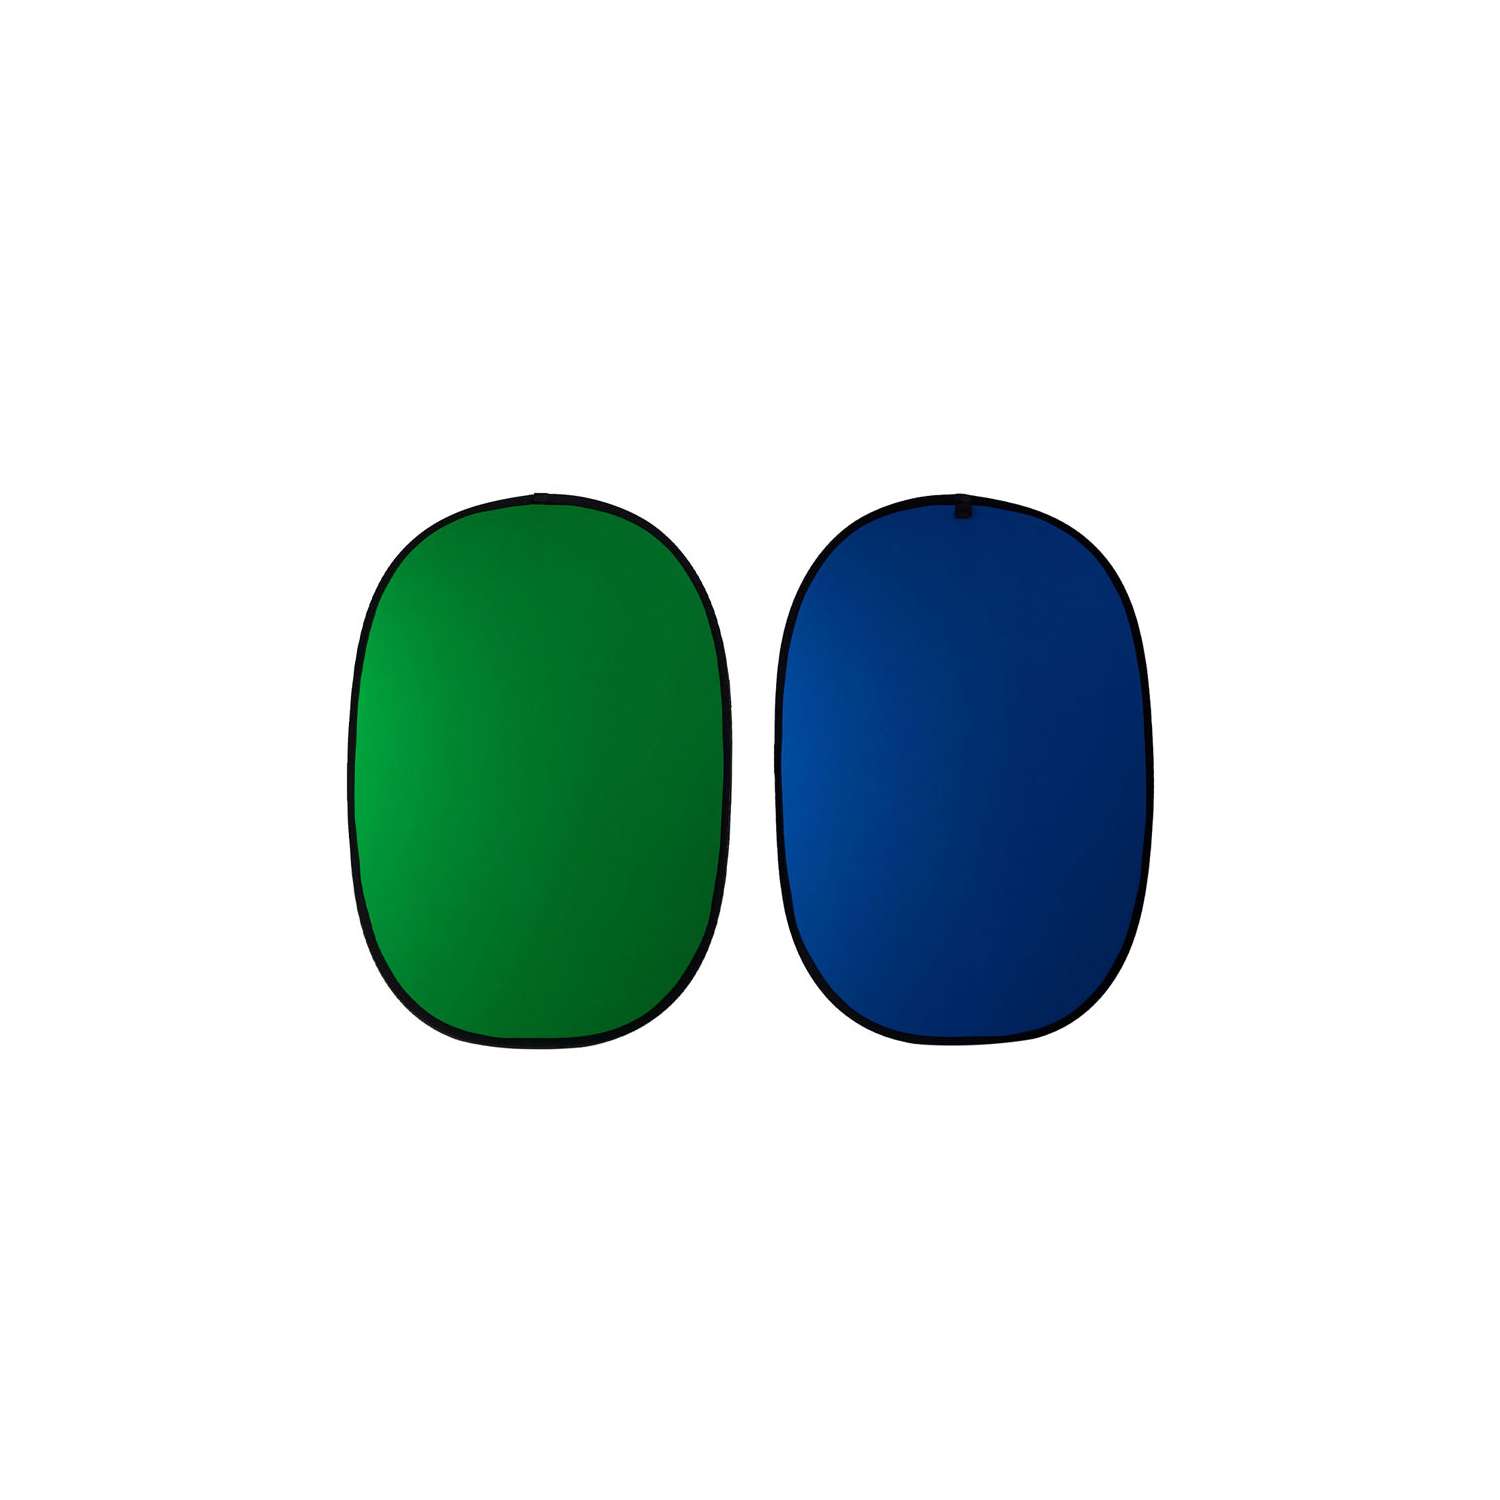 Фон RAYLAB складной rf 12 хромакей муслиновый зеленый и синий - фото 1